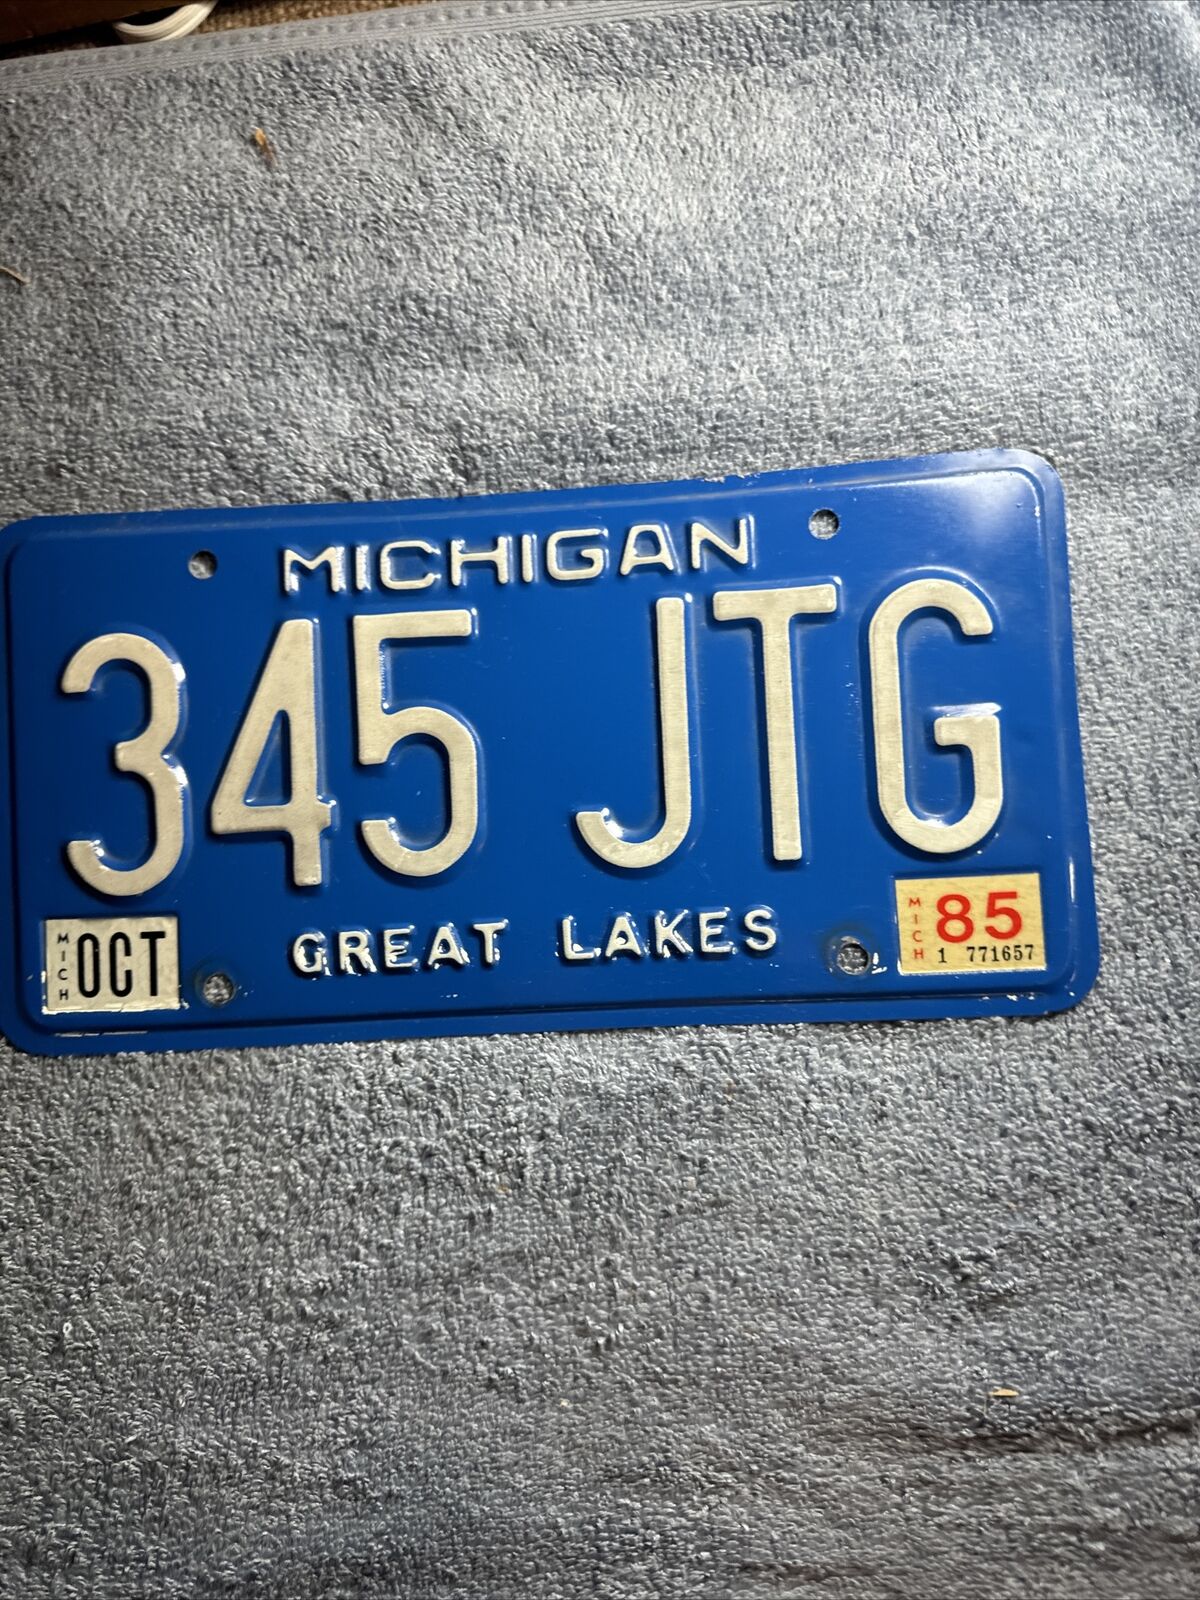 1985 Michigan License Plate 345 JTG Great Lakes